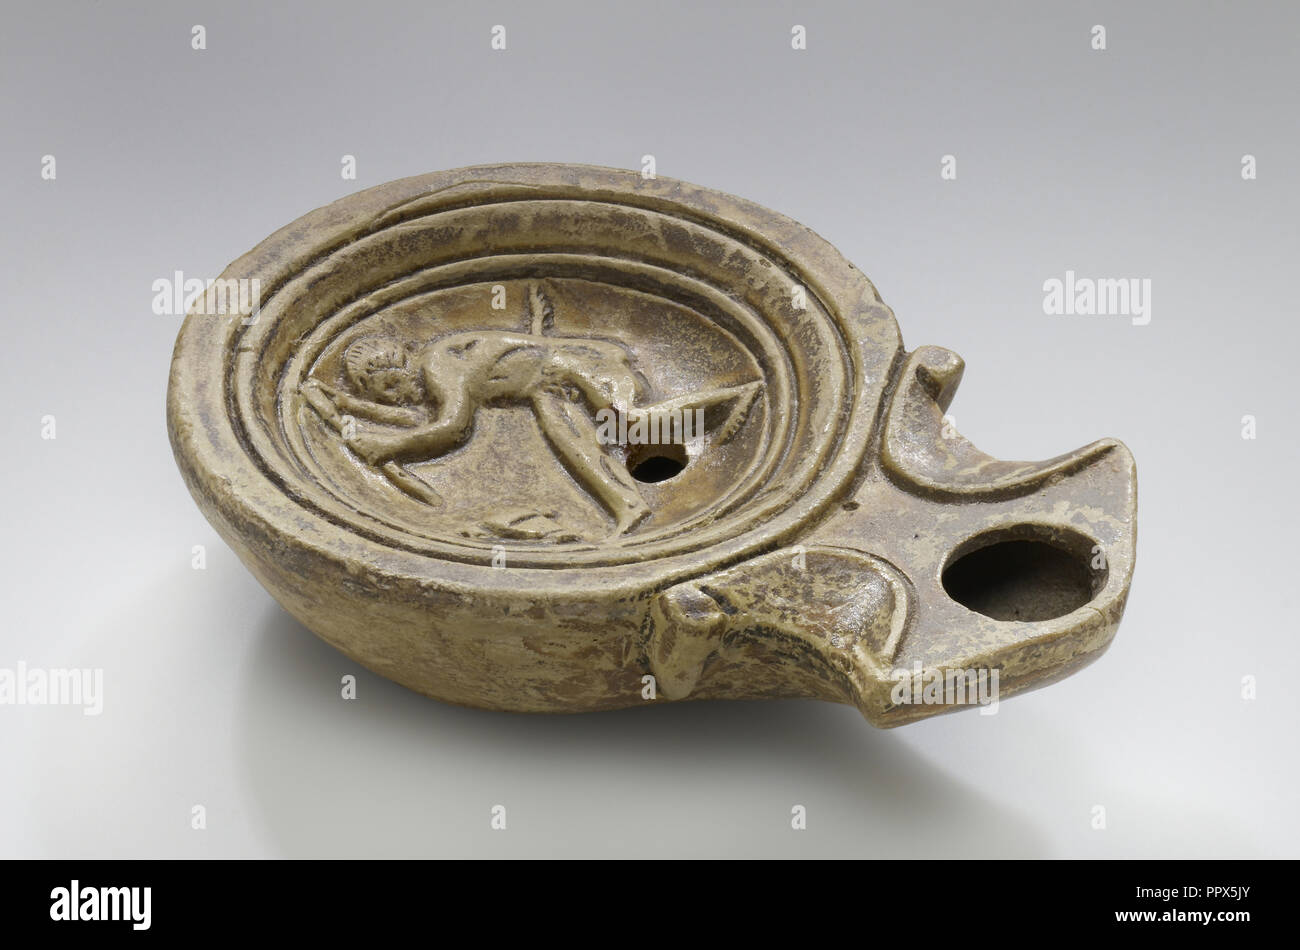 Lamp, North Africa; 1st - 4th century; Terracotta; 2.5 x 7 x 10 cm, 1 x 2 3,4 x 3 15,16 in Stock Photo